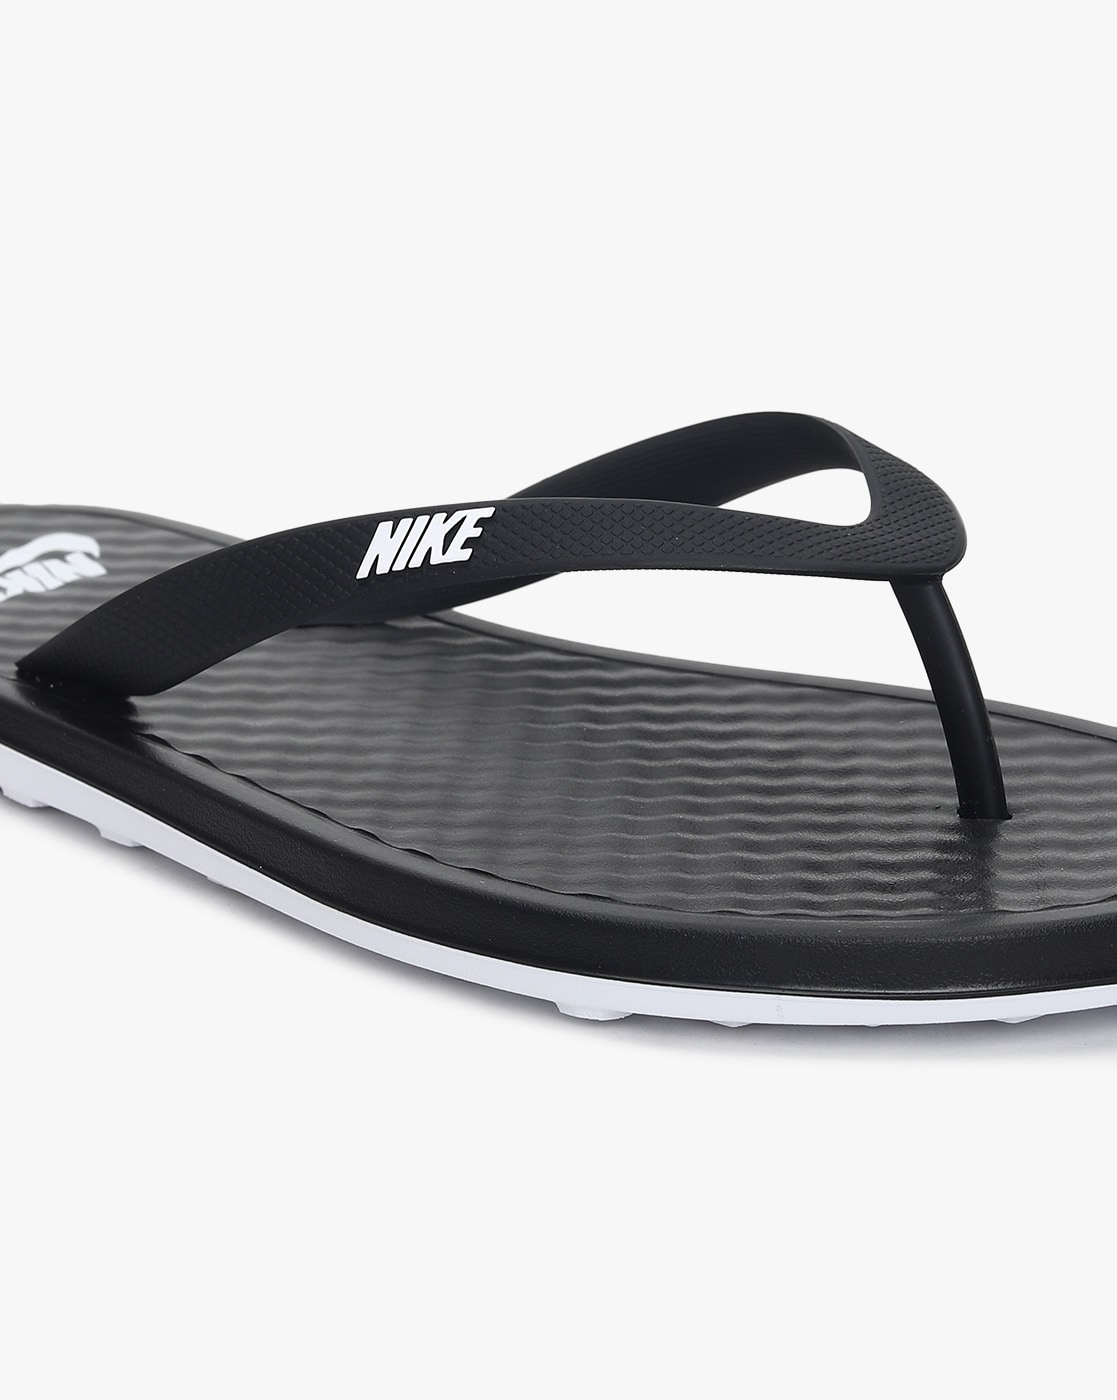 NEW Nike Men's Kepa Kai Thong Flip Flops Slippers Sandals Size 9 to 15 |  eBay